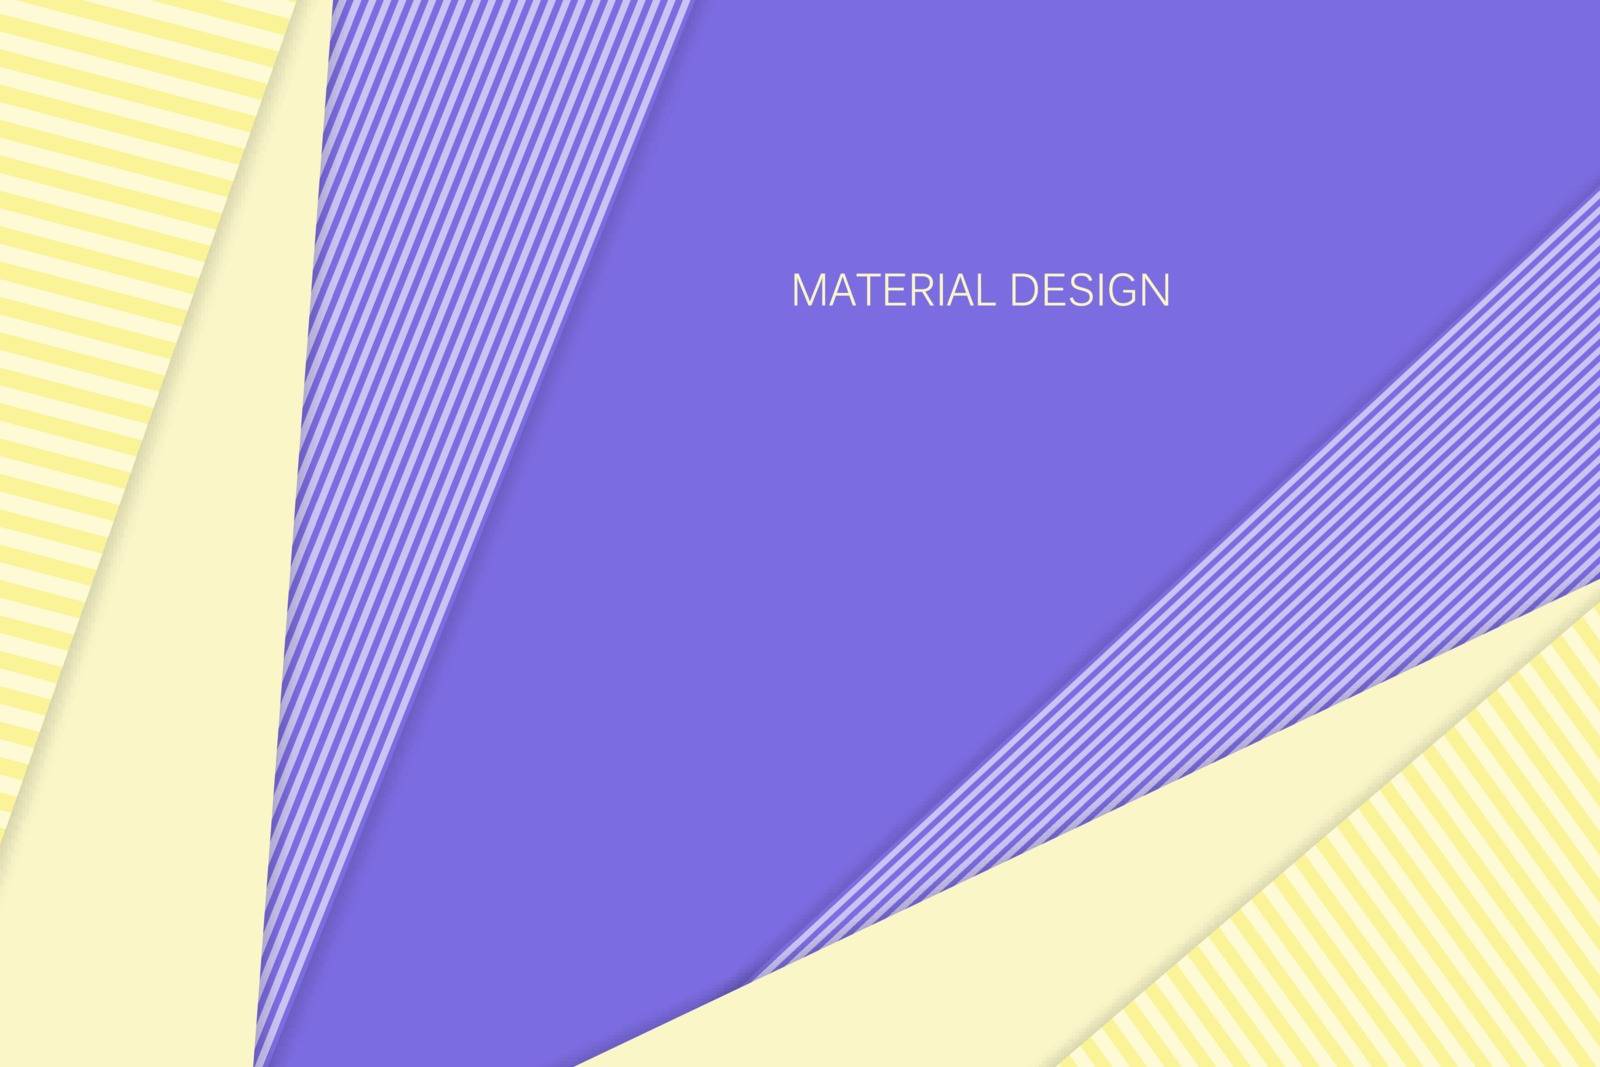 Unusual modern material design vector background. Geometric shapes. Eps10 vector illustration